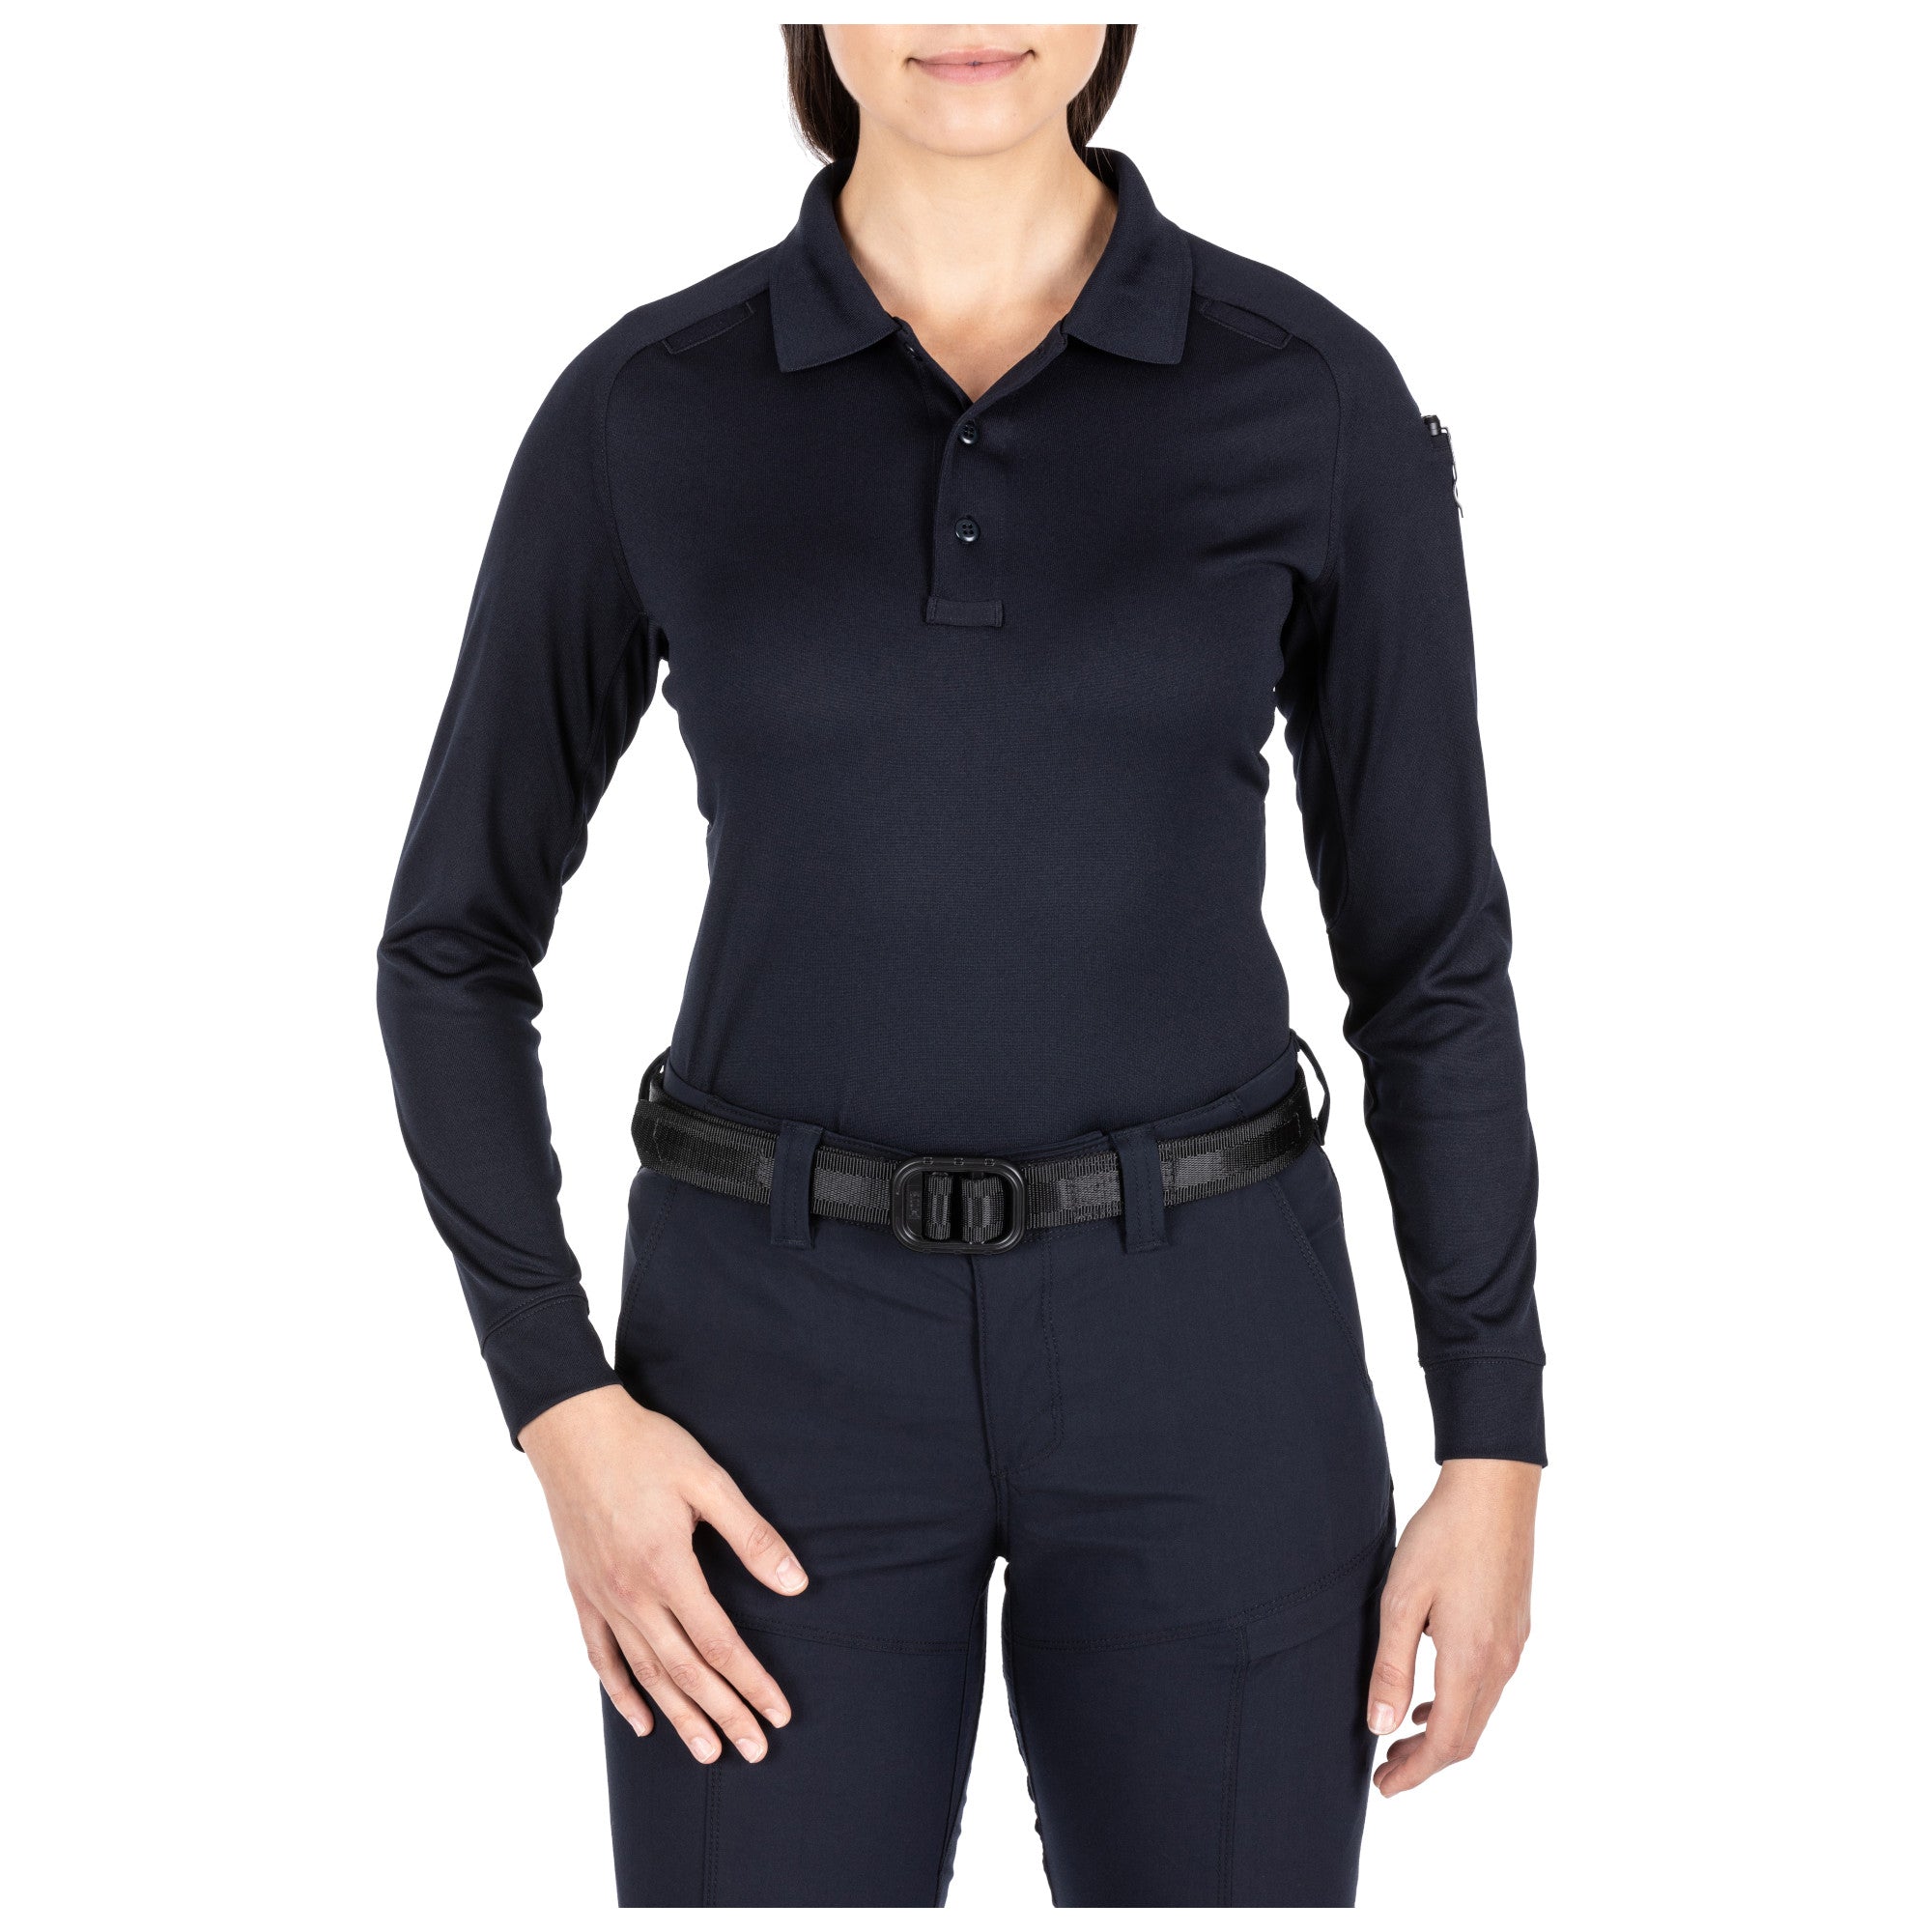 5.11 Tactical Women's Performance Long Sleeve Polo Dark Navy Tactical Gear Australia Supplier Distributor Dealer